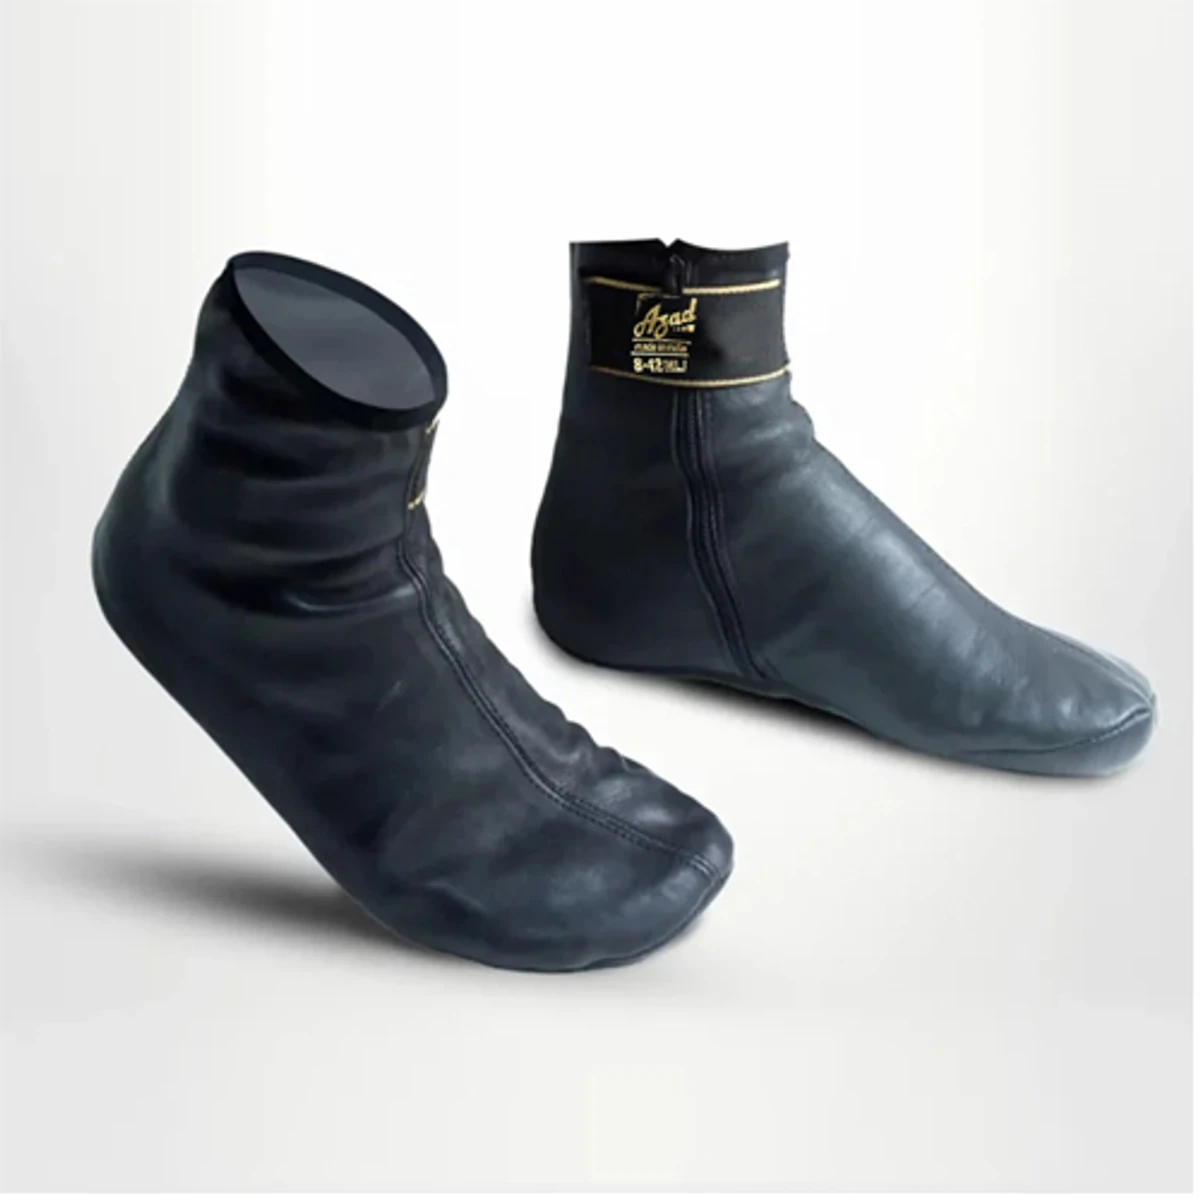 Black Color Pakistani Leather Zipper Socks for Men & Women (100% Leather)